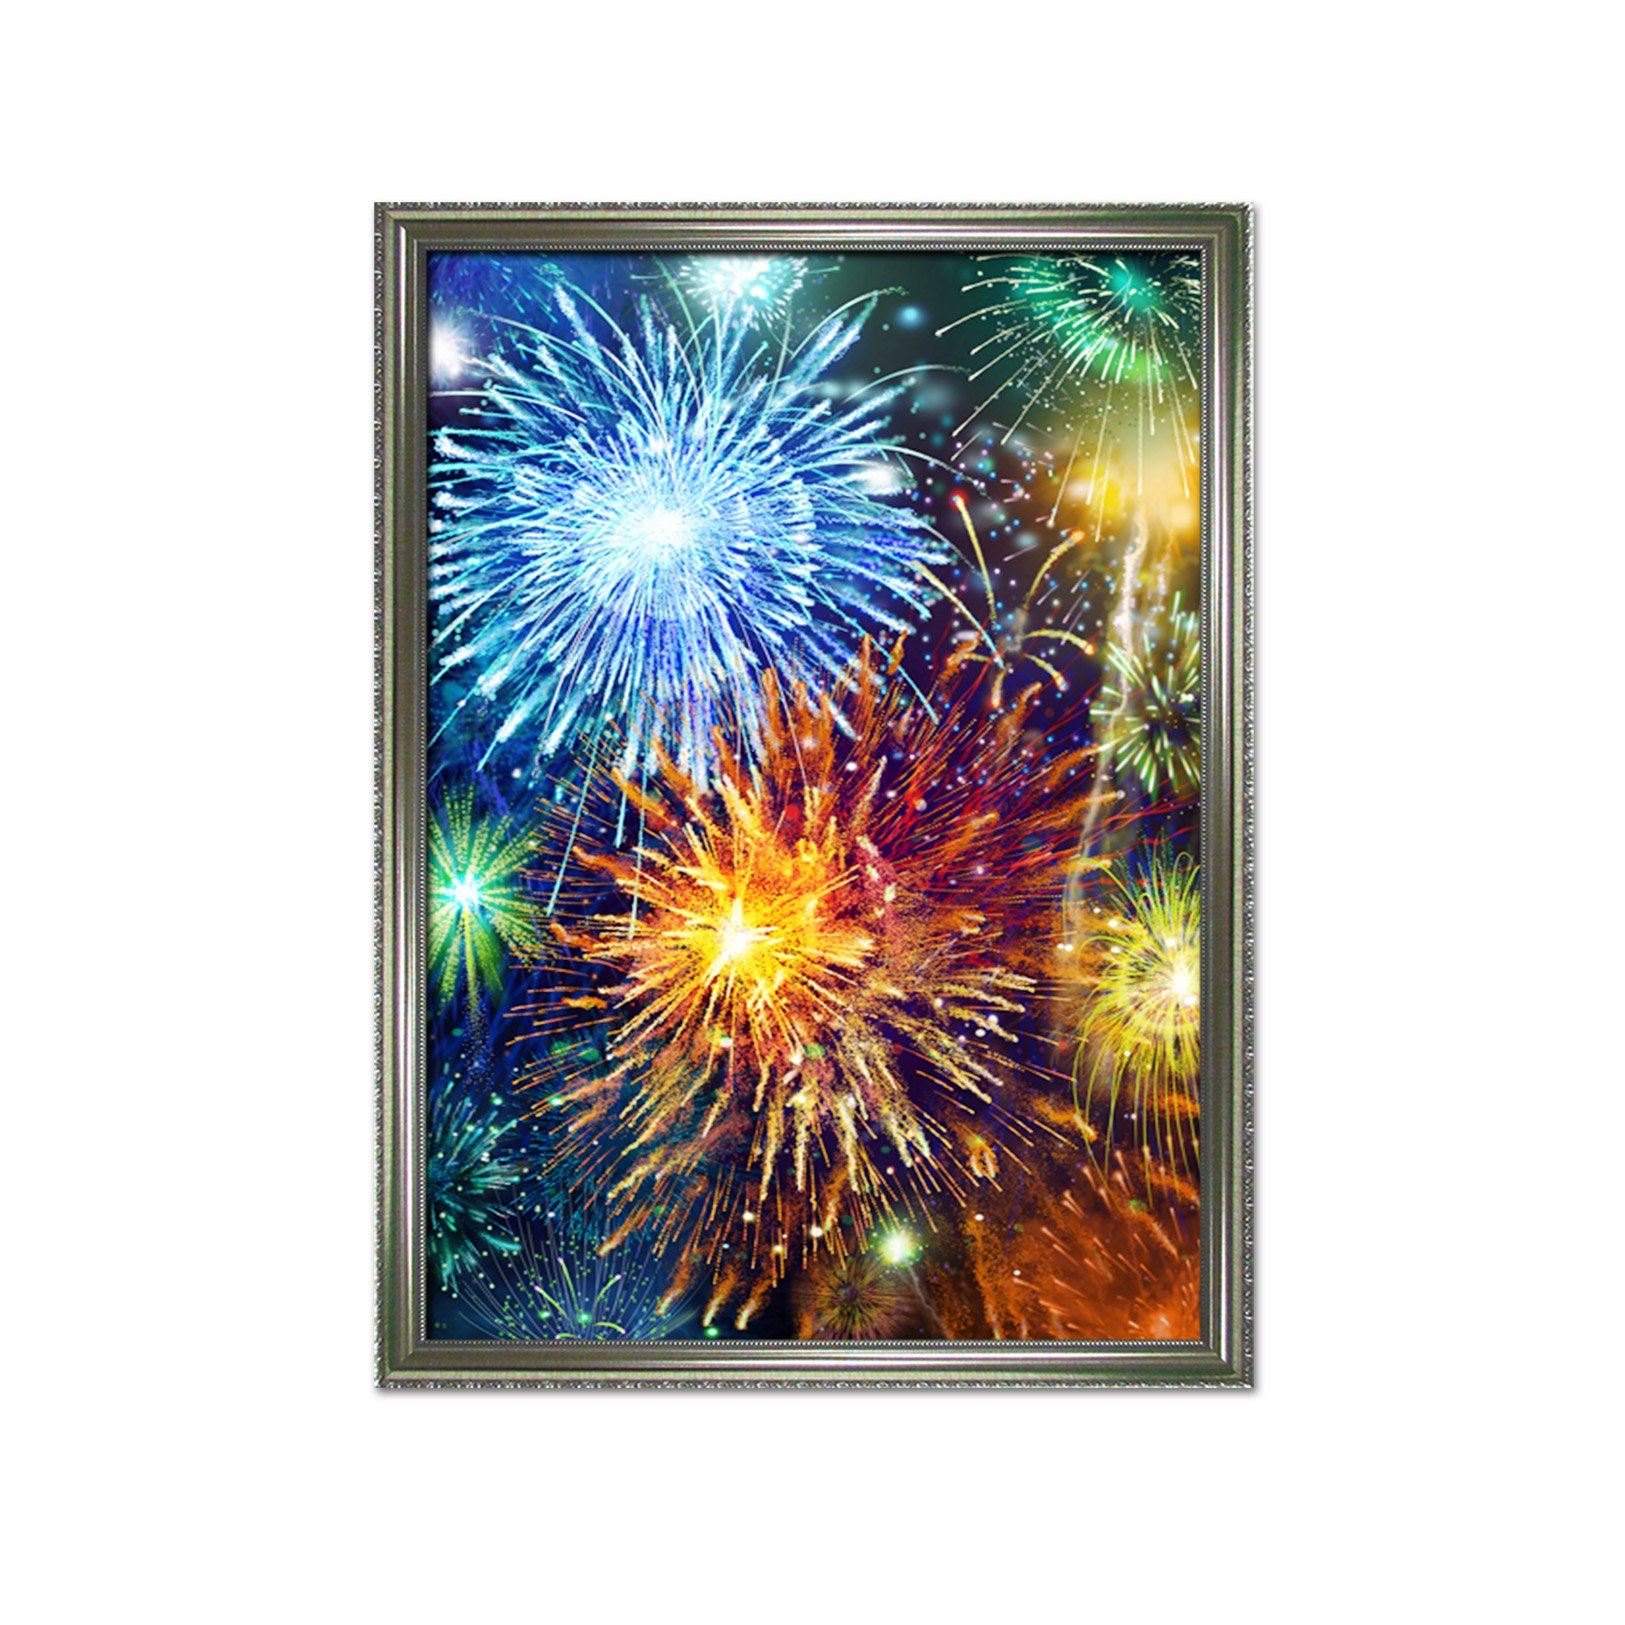 3D Beautiful Fireworks 027 Fake Framed Print Painting Wallpaper AJ Creativity Home 